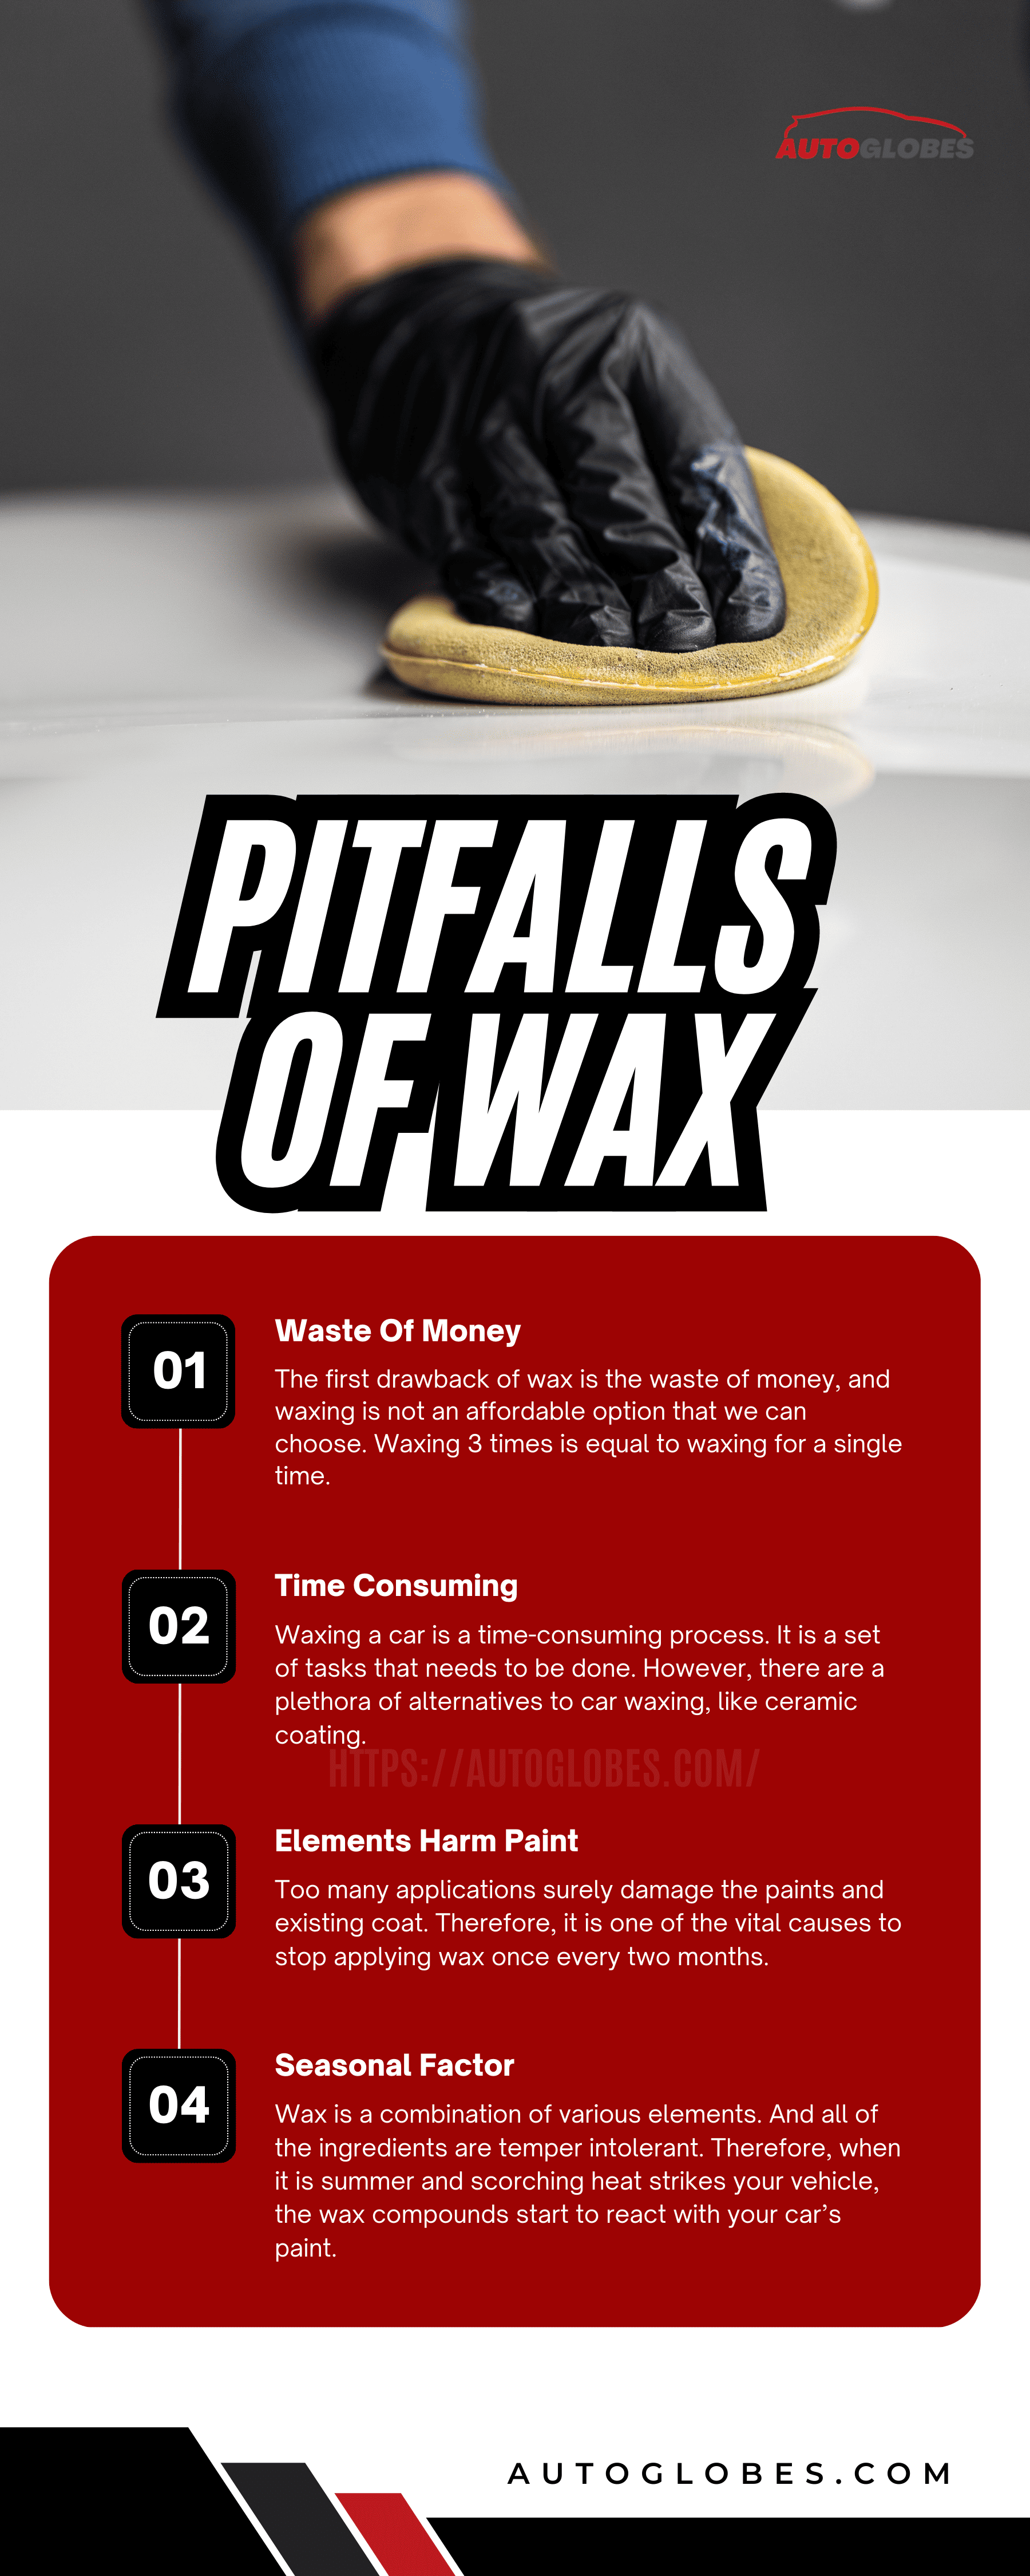 Pitfalls of wax Infographic